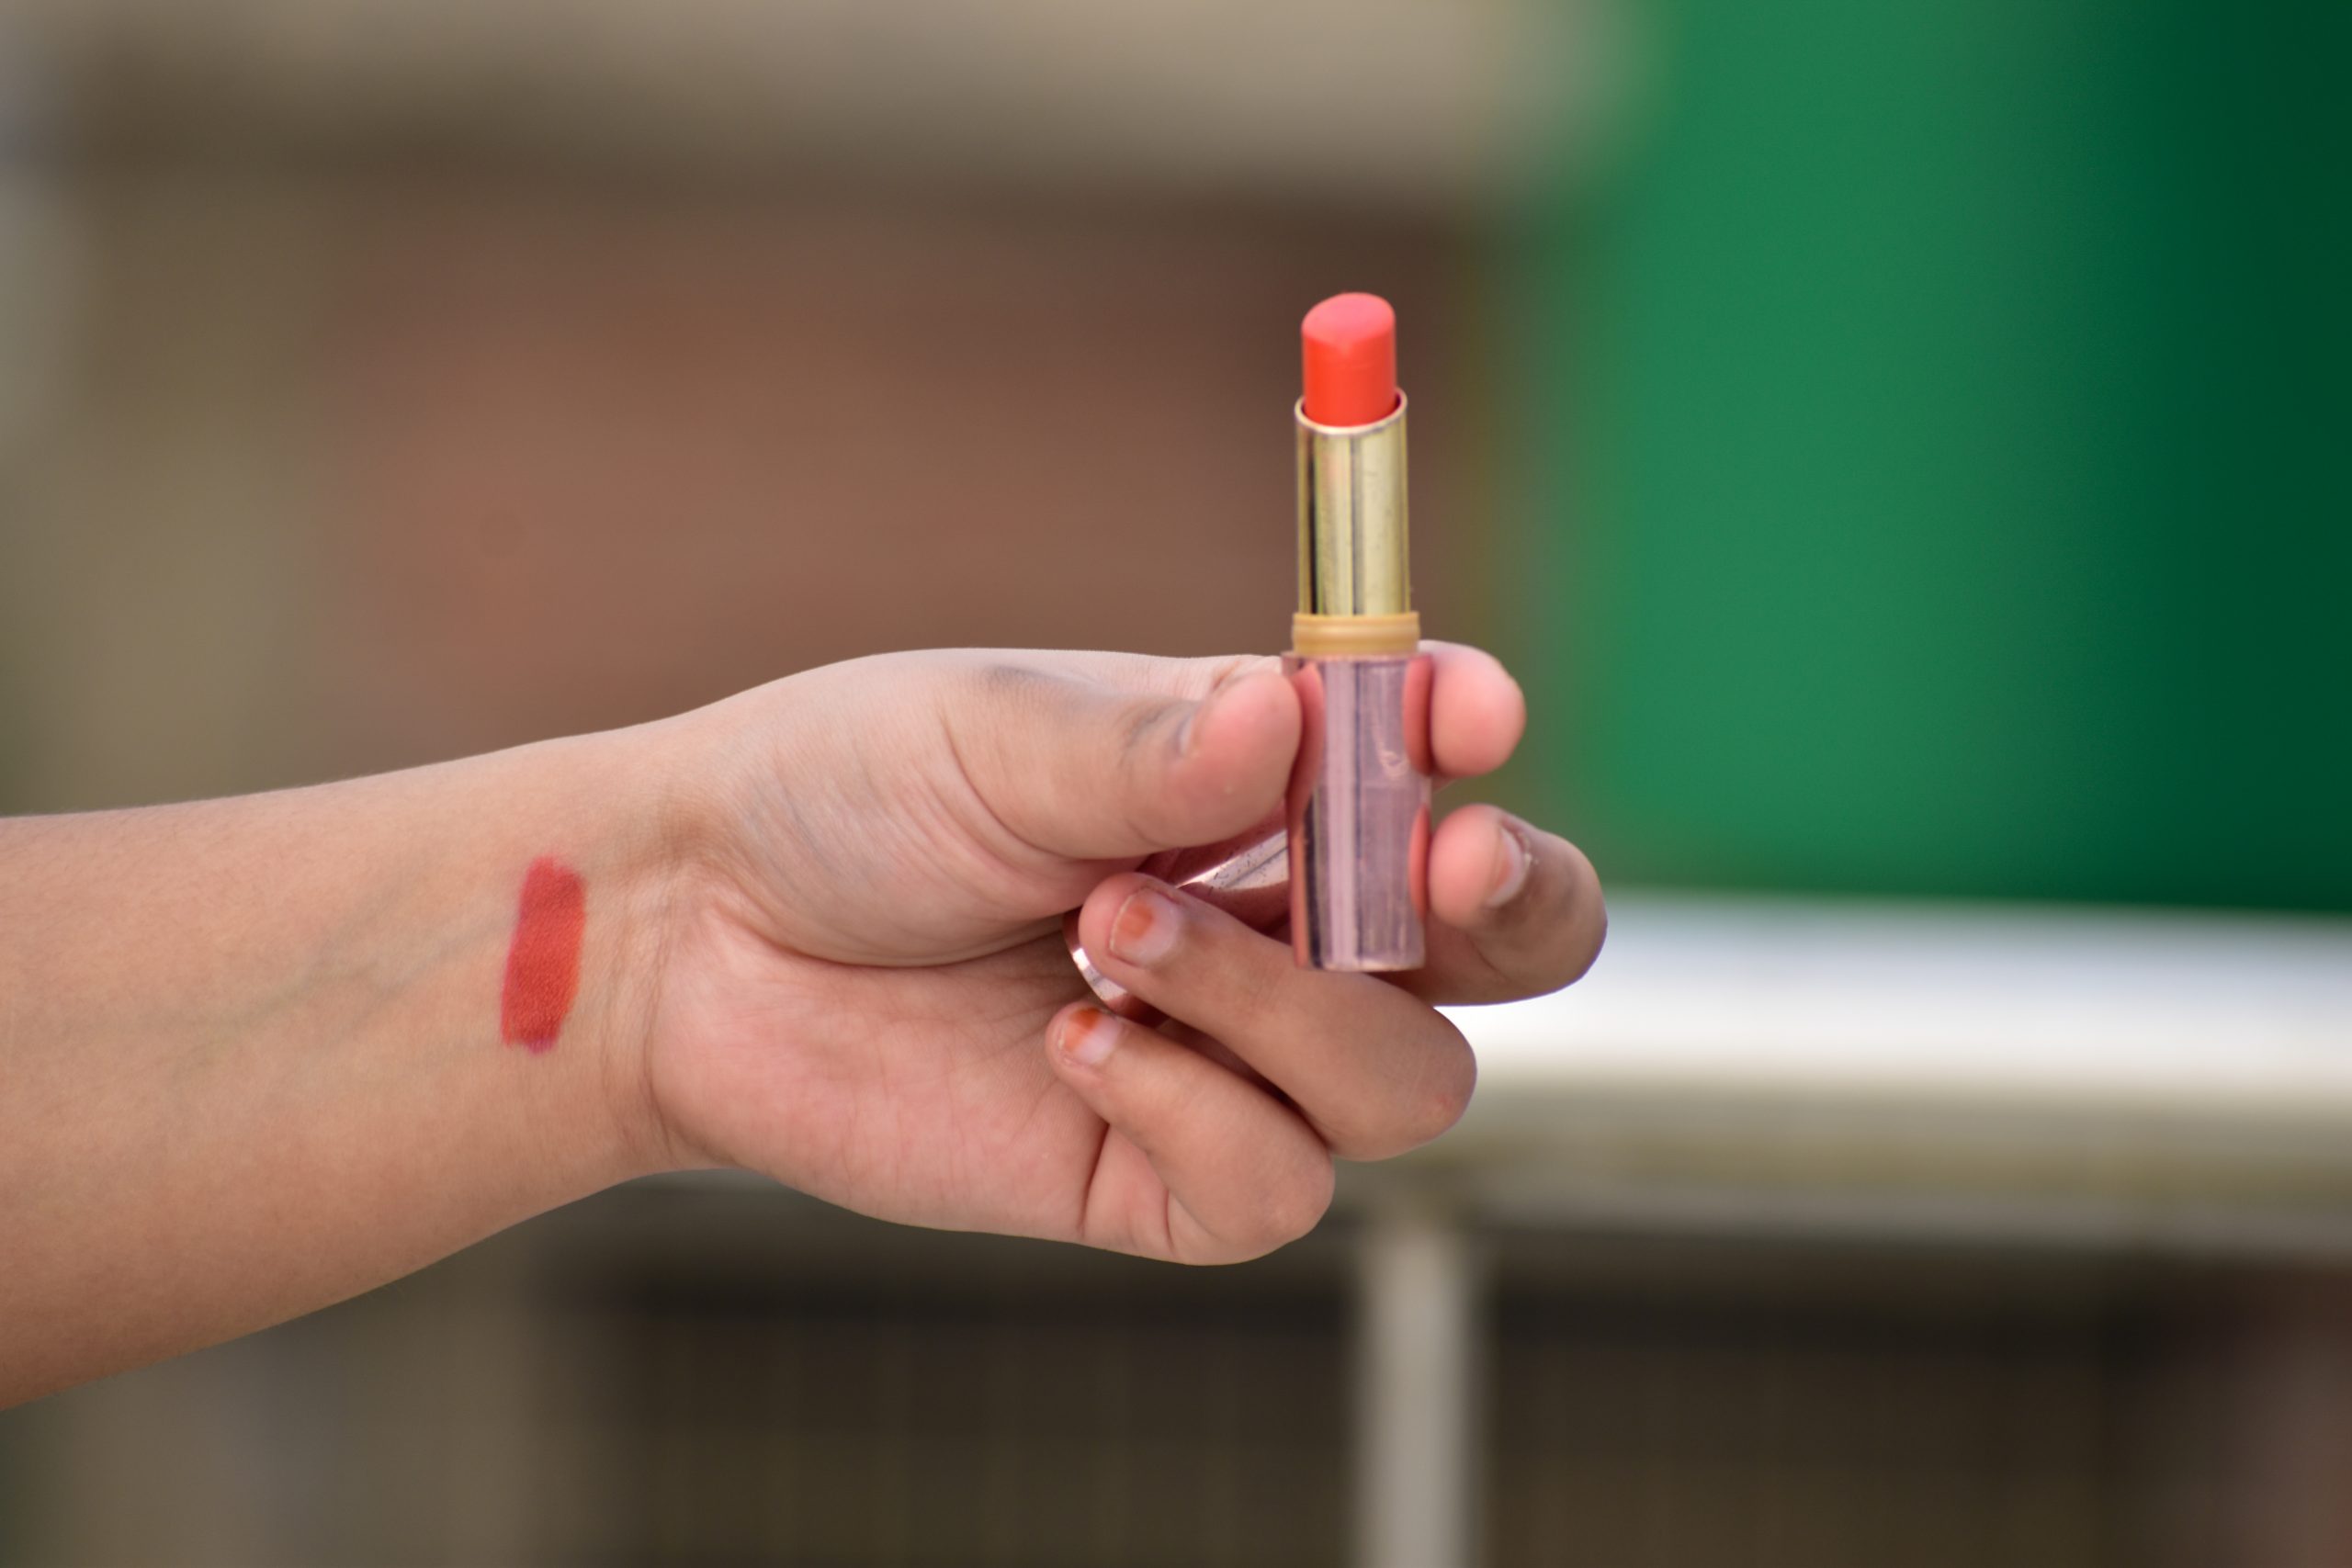 A lipstick in hand